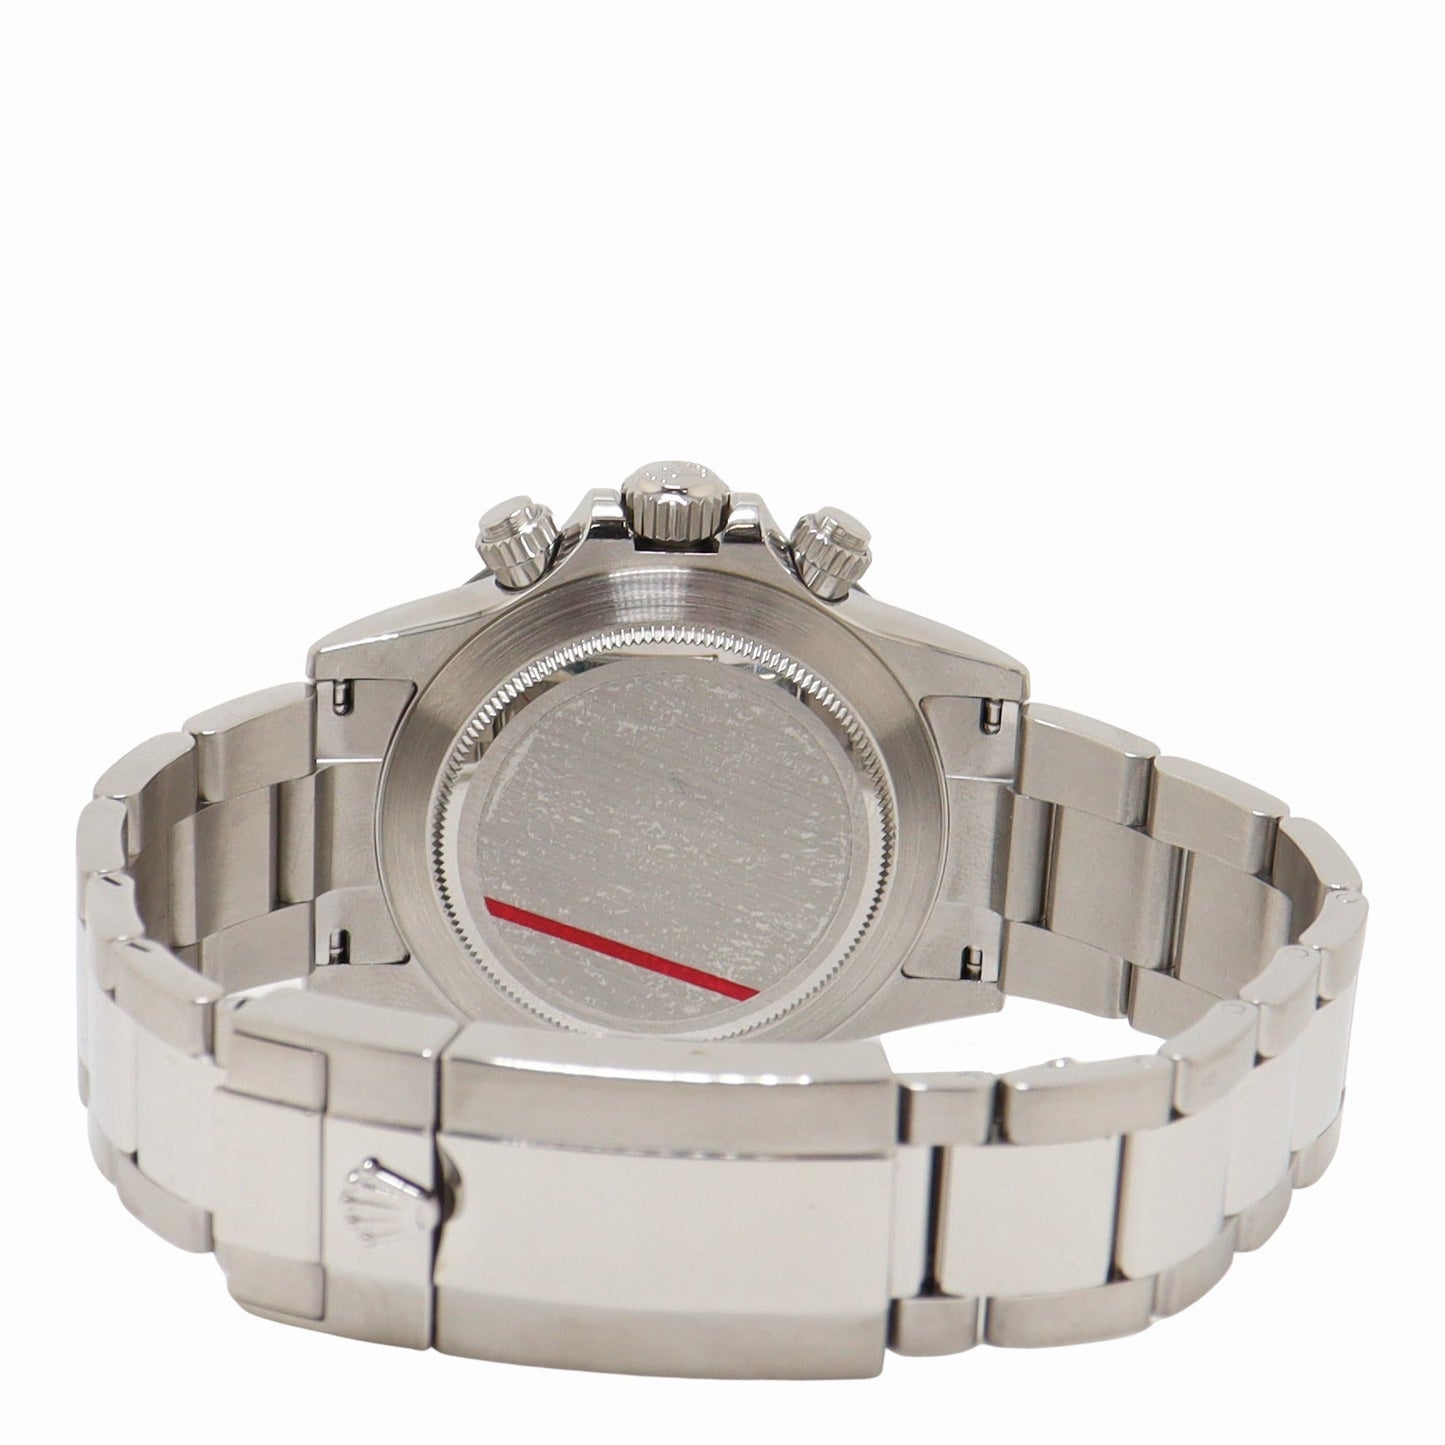 Rolex Daytona “Panda” Stainless Steel 40mm White Chronograph Dial Watch Reference# 116500LN - Happy Jewelers Fine Jewelry Lifetime Warranty